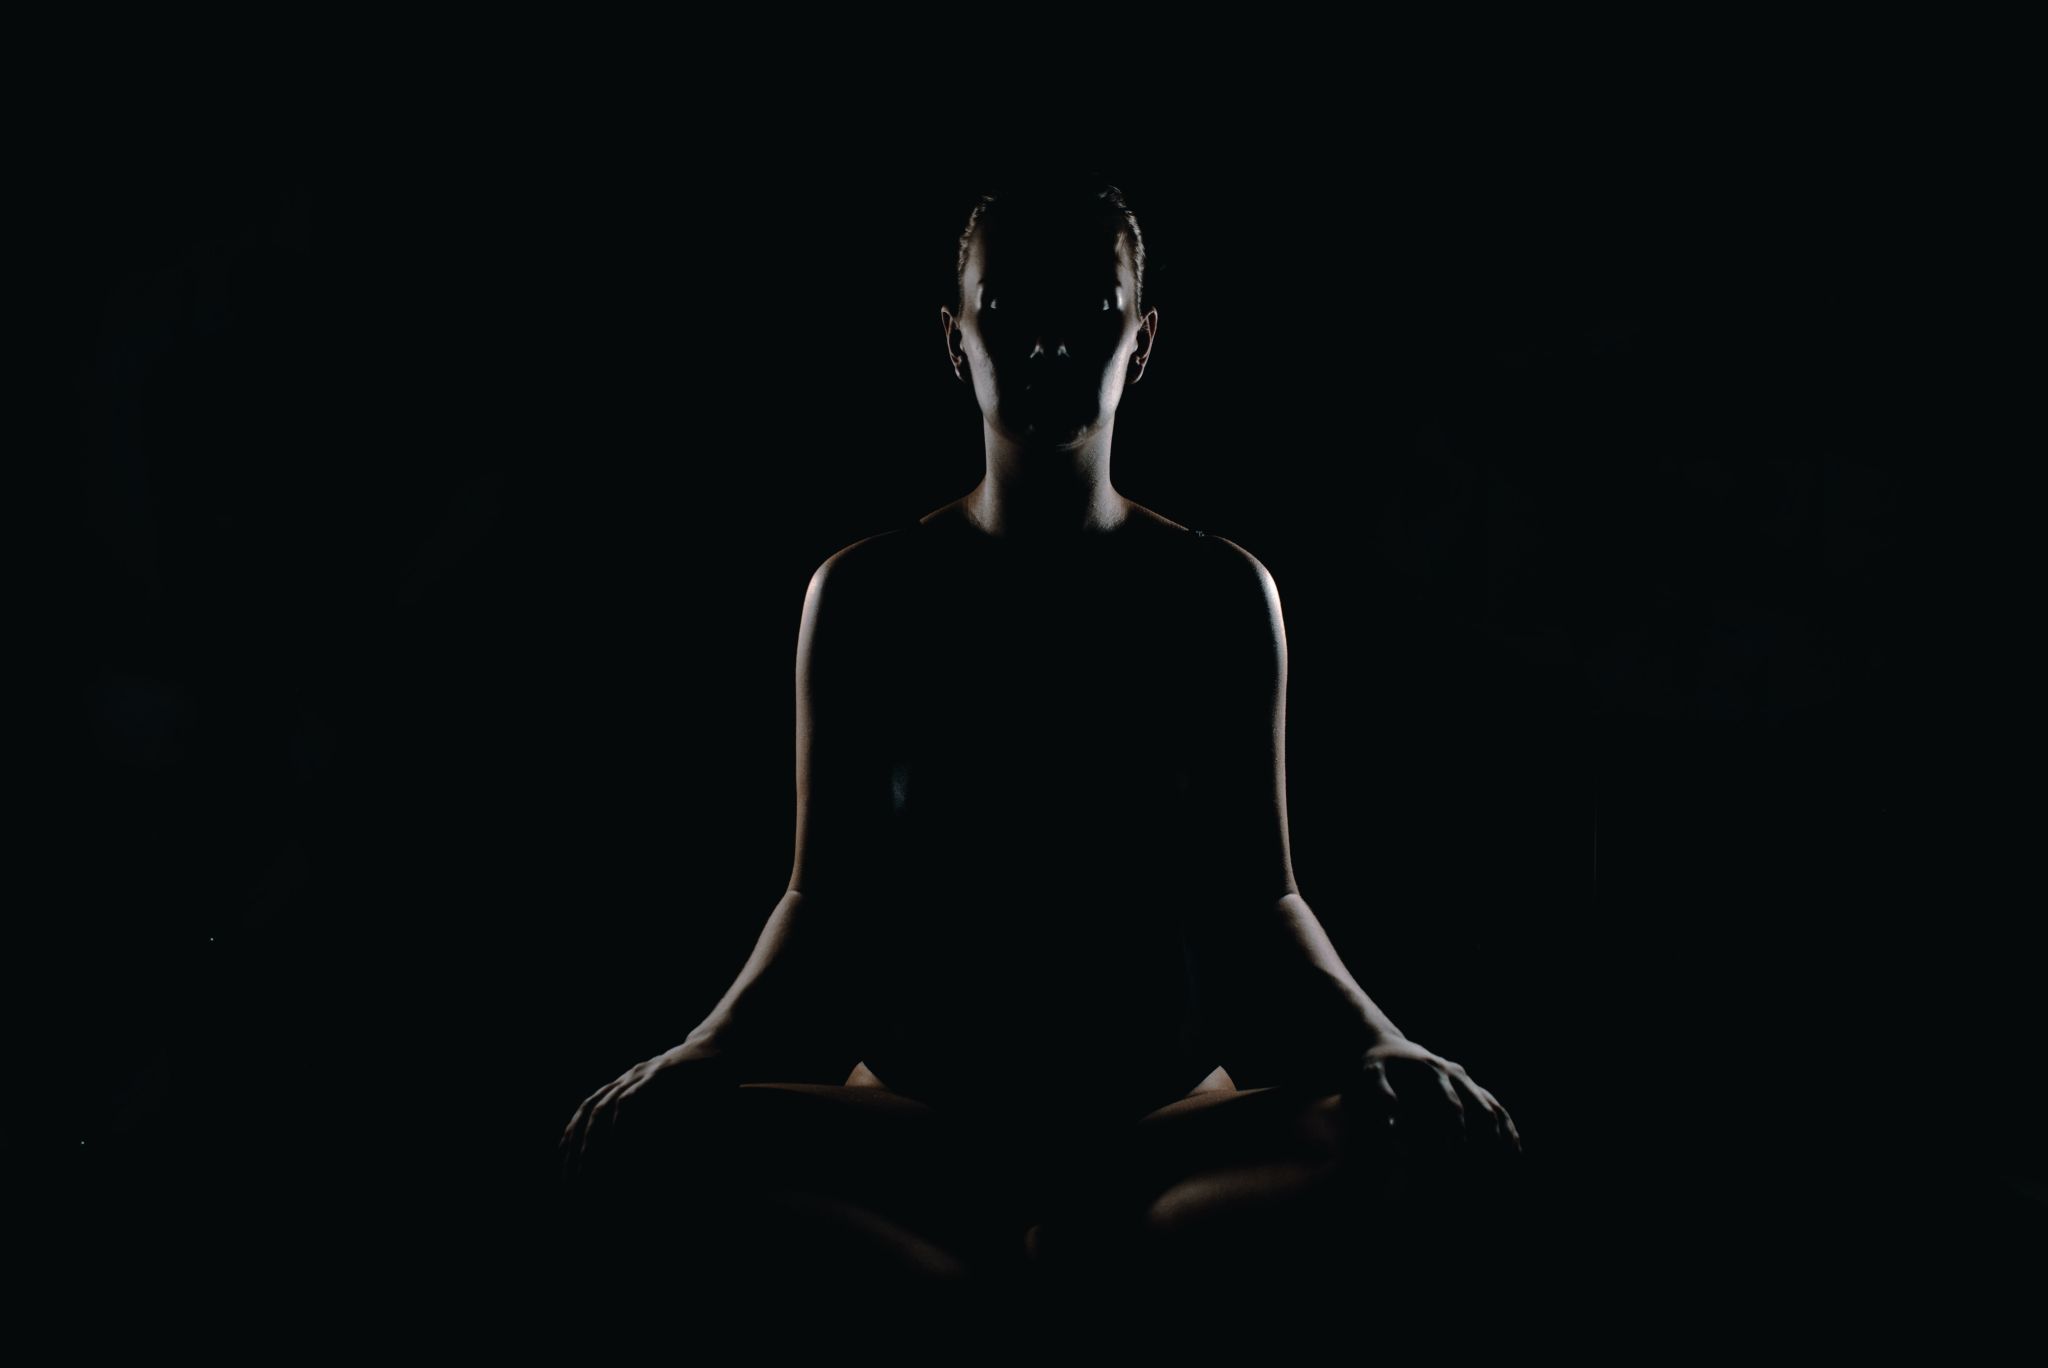 meditator in shadow